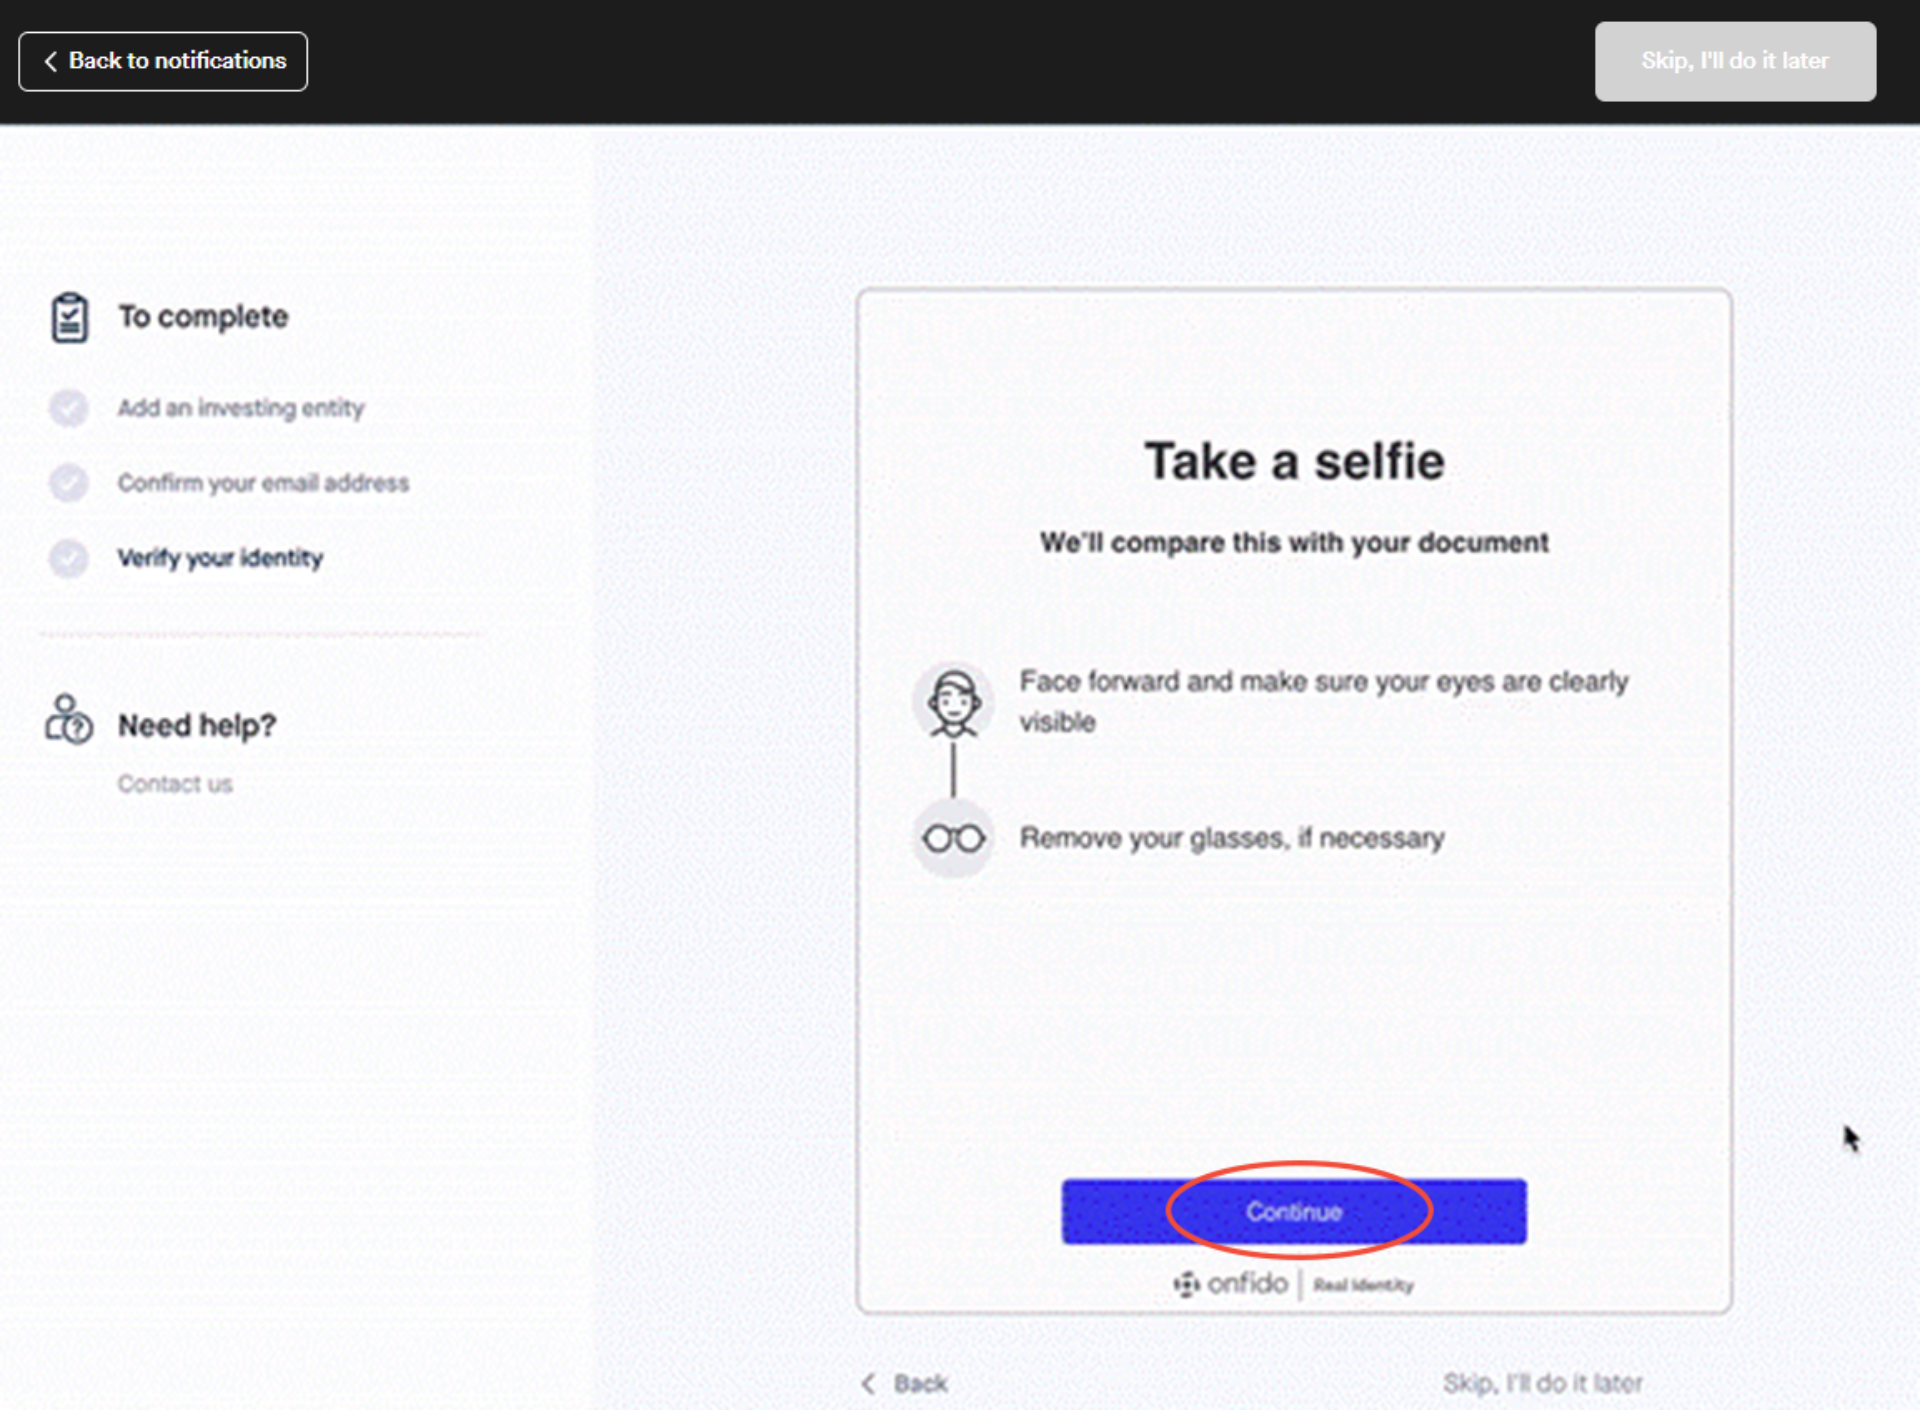 How to create a new investing entity 16 Verify identity Take a selfie Box